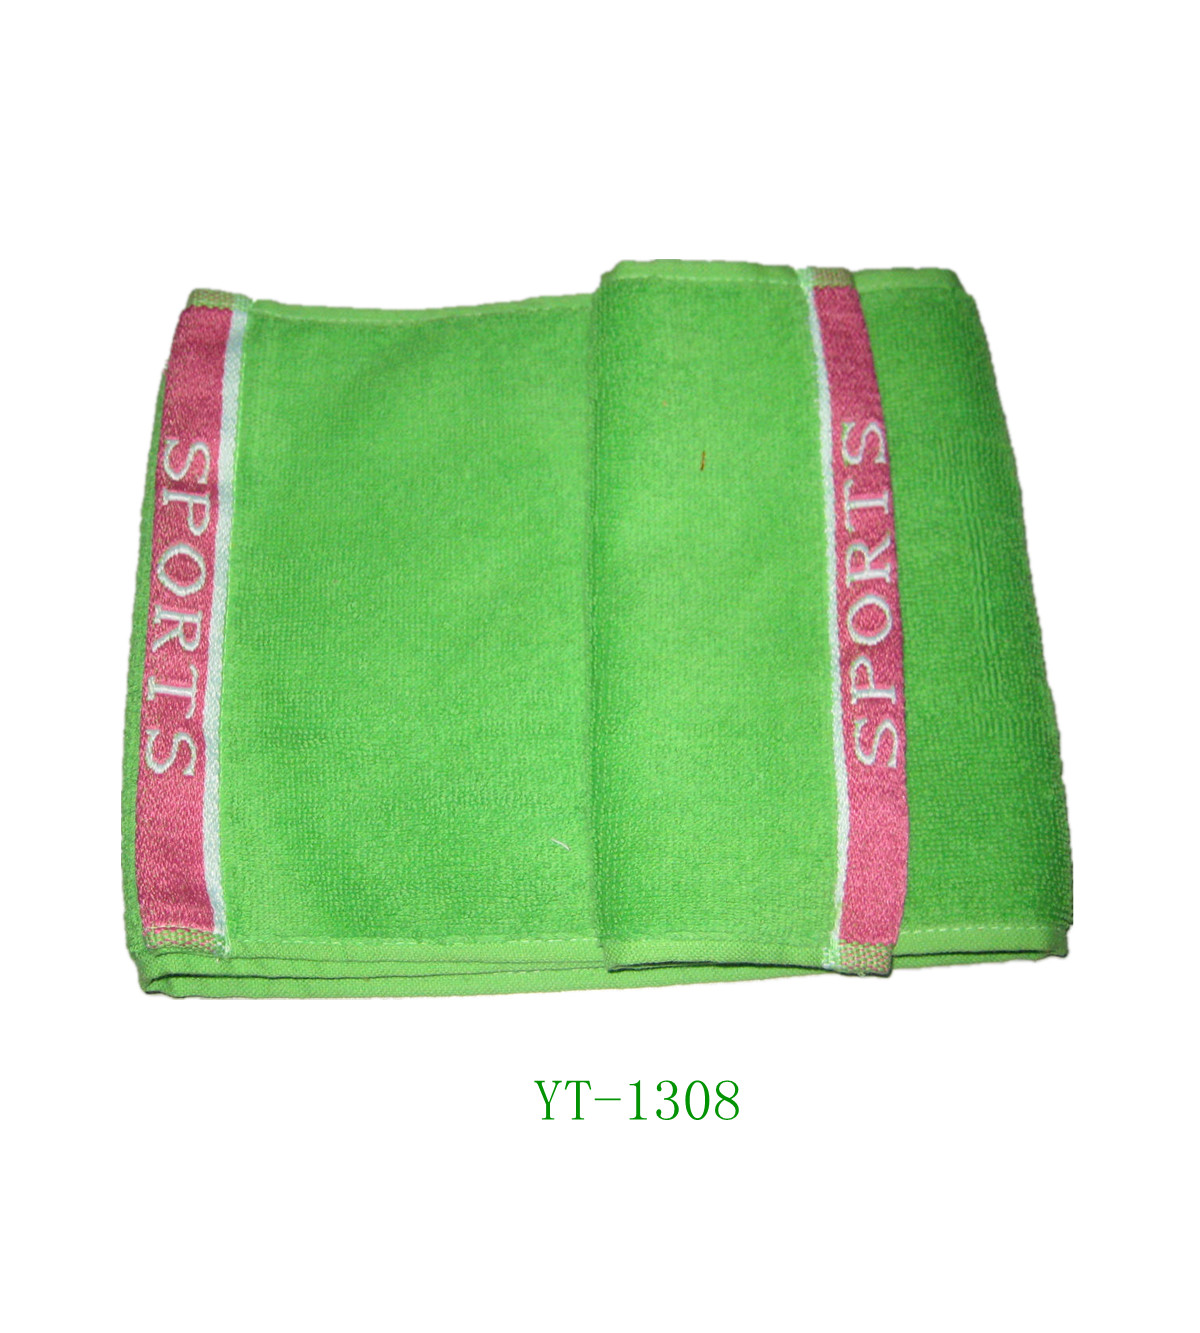 Jacquard Sports Towel, 100% Cotton Material, Blue Color as YT-1305